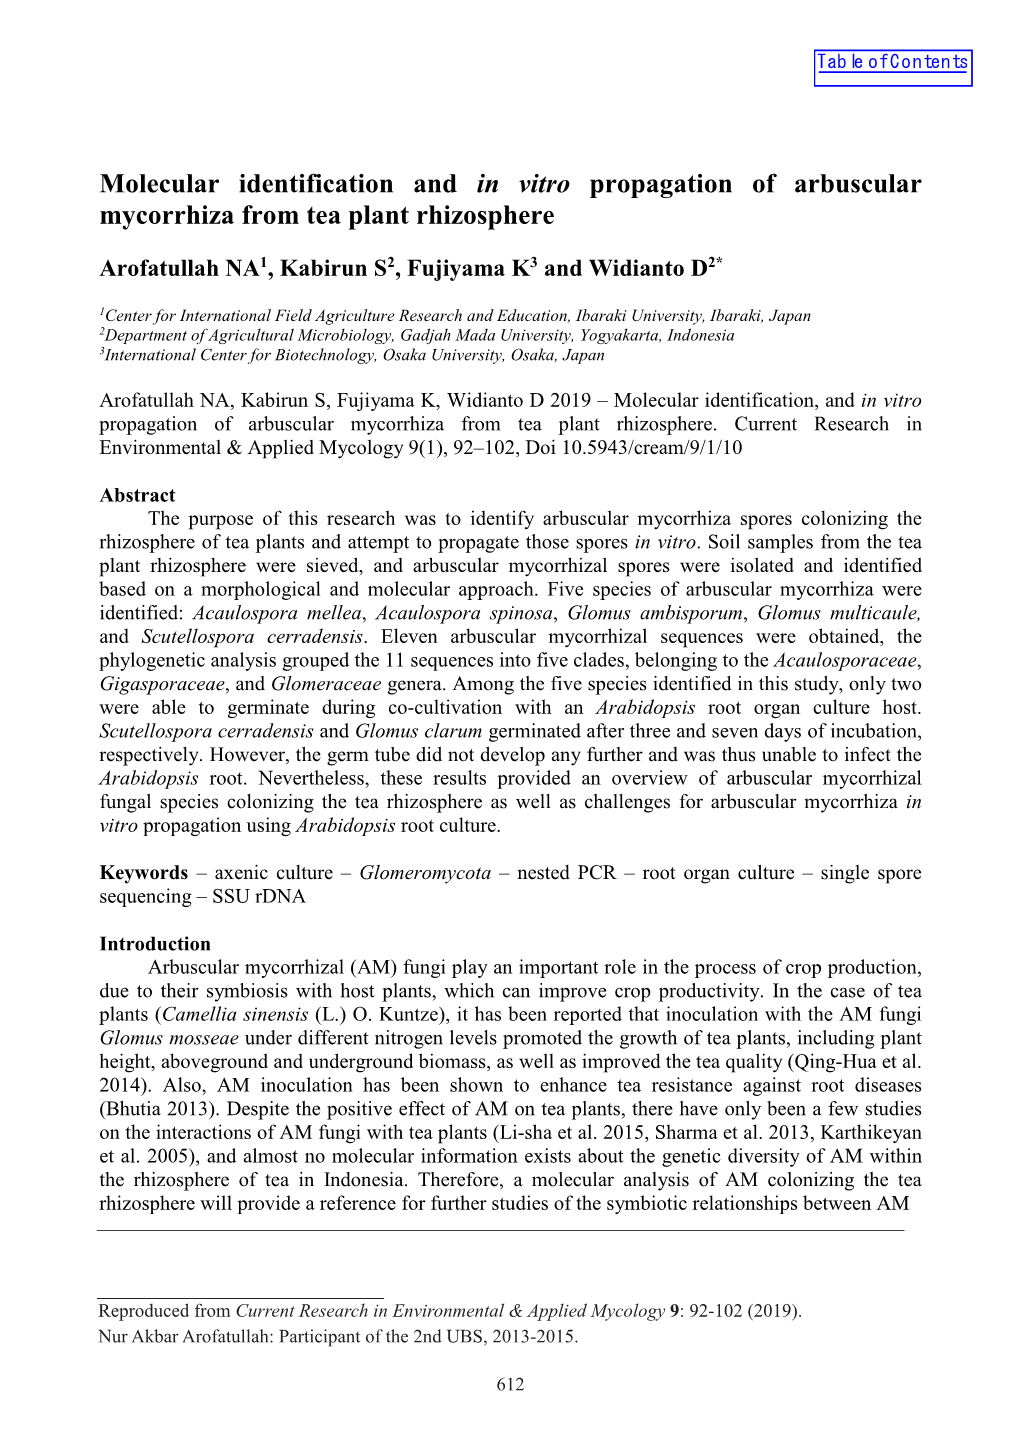 Molecular Identification and in Vitro Propagation of Arbuscular Mycorrhiza from Tea Plant Rhizosphere